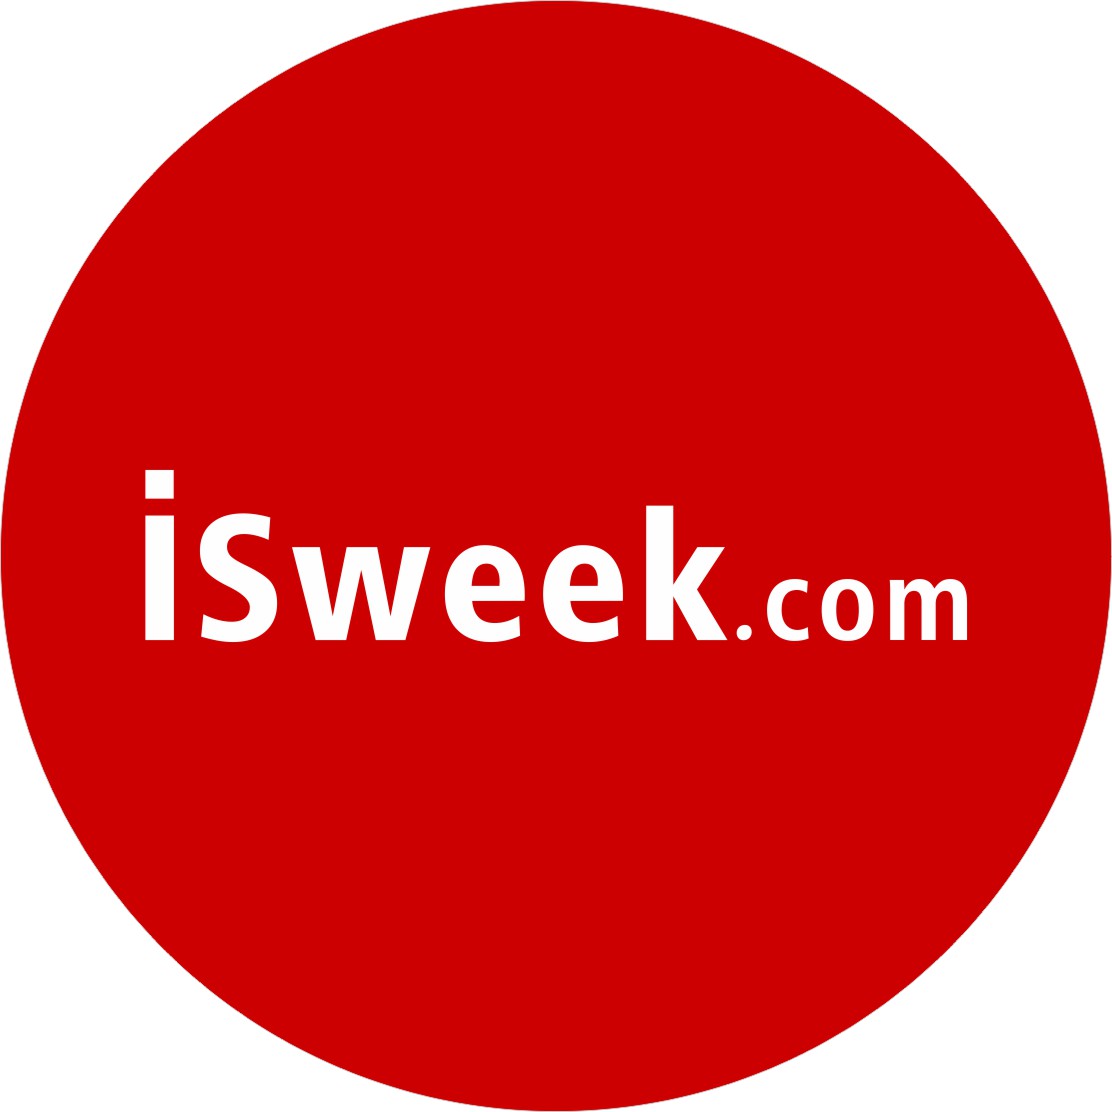 ISweekcom Logo